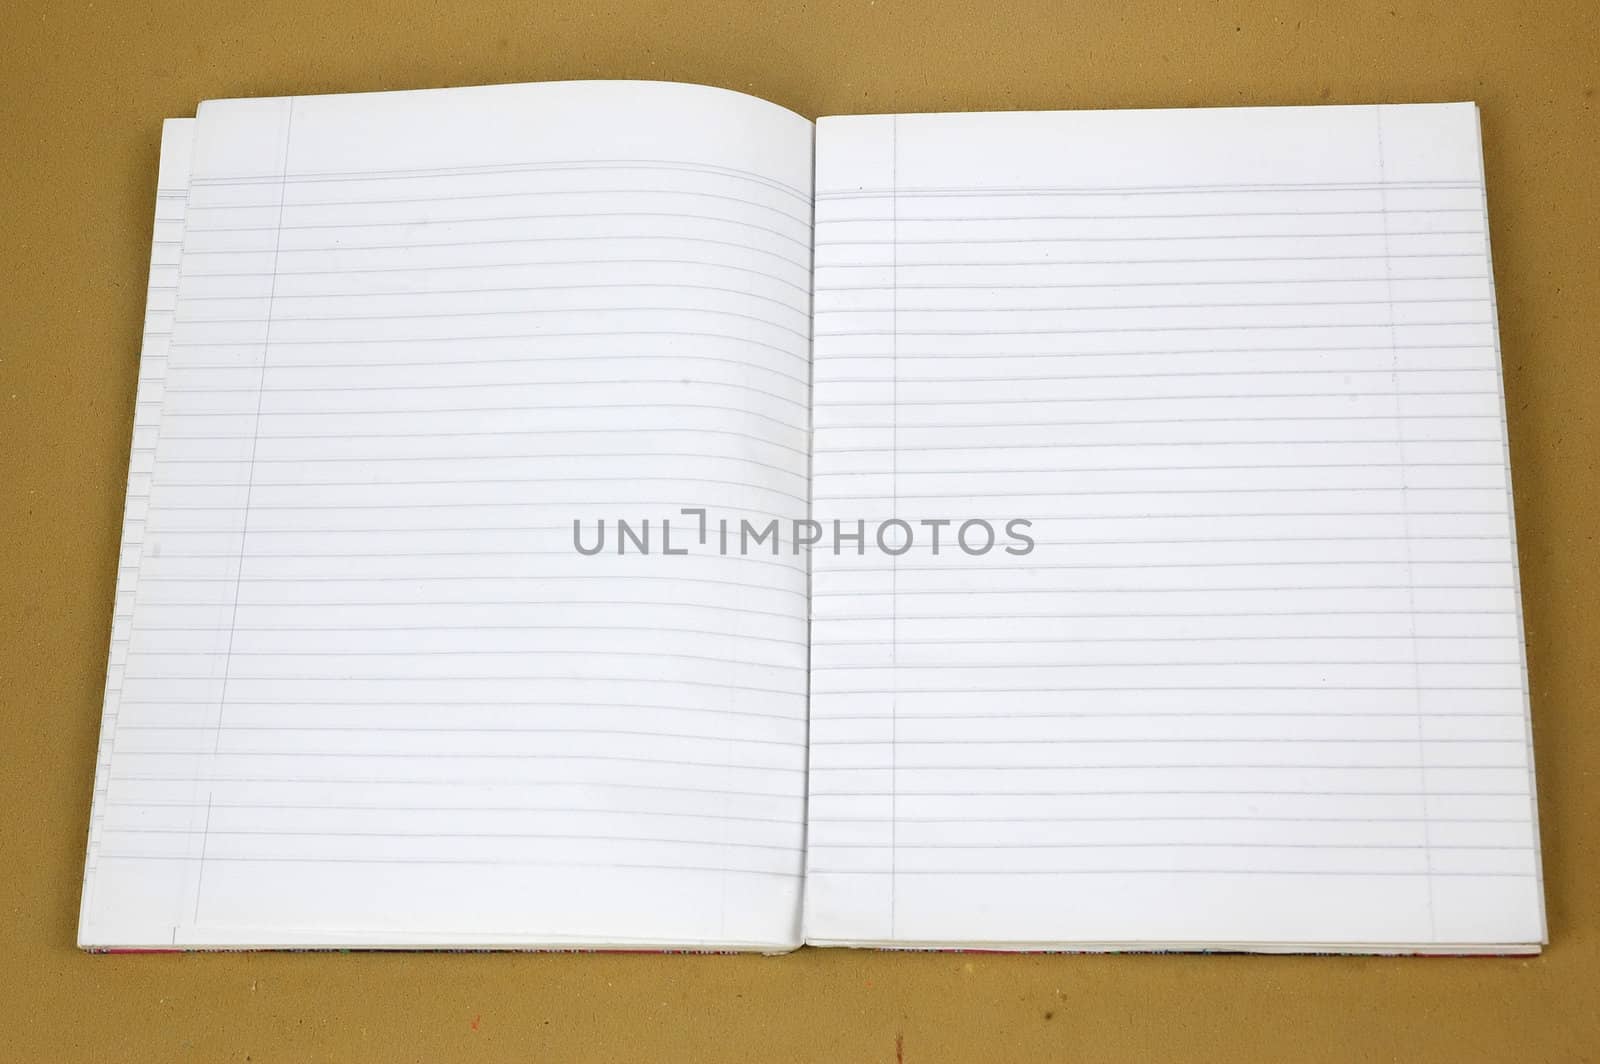 a blank book striped open by antonihalim